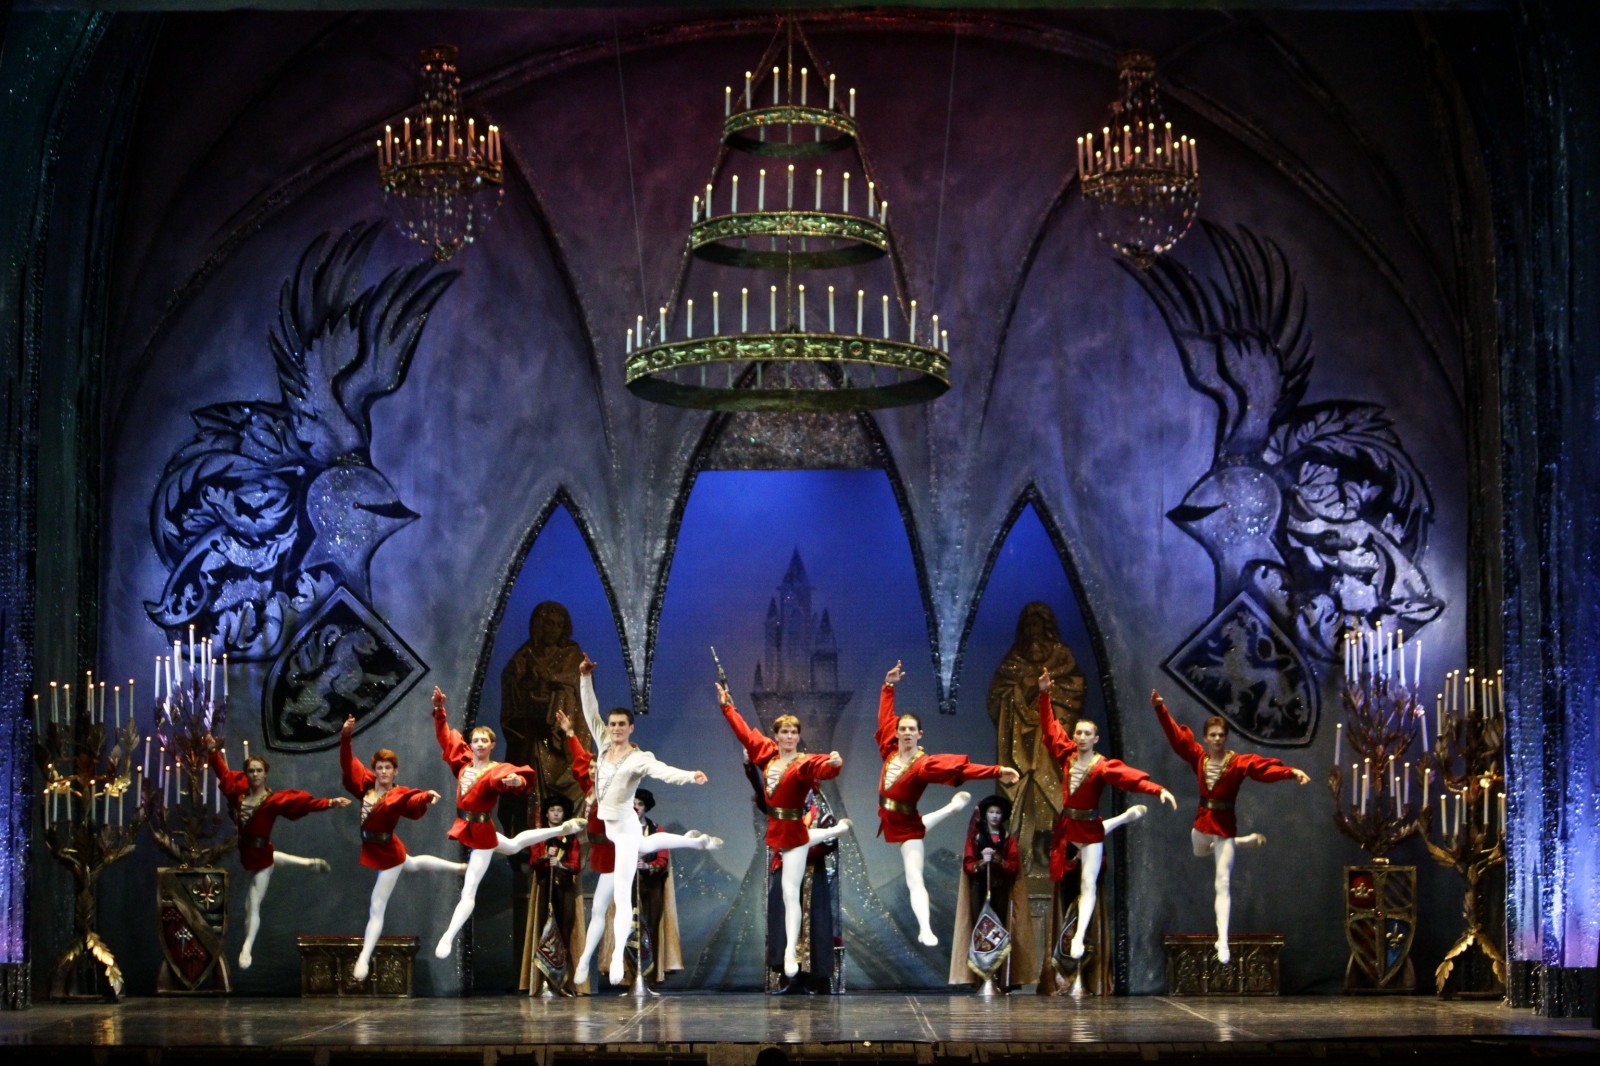 Театр оперы и балета нижний новгород фото